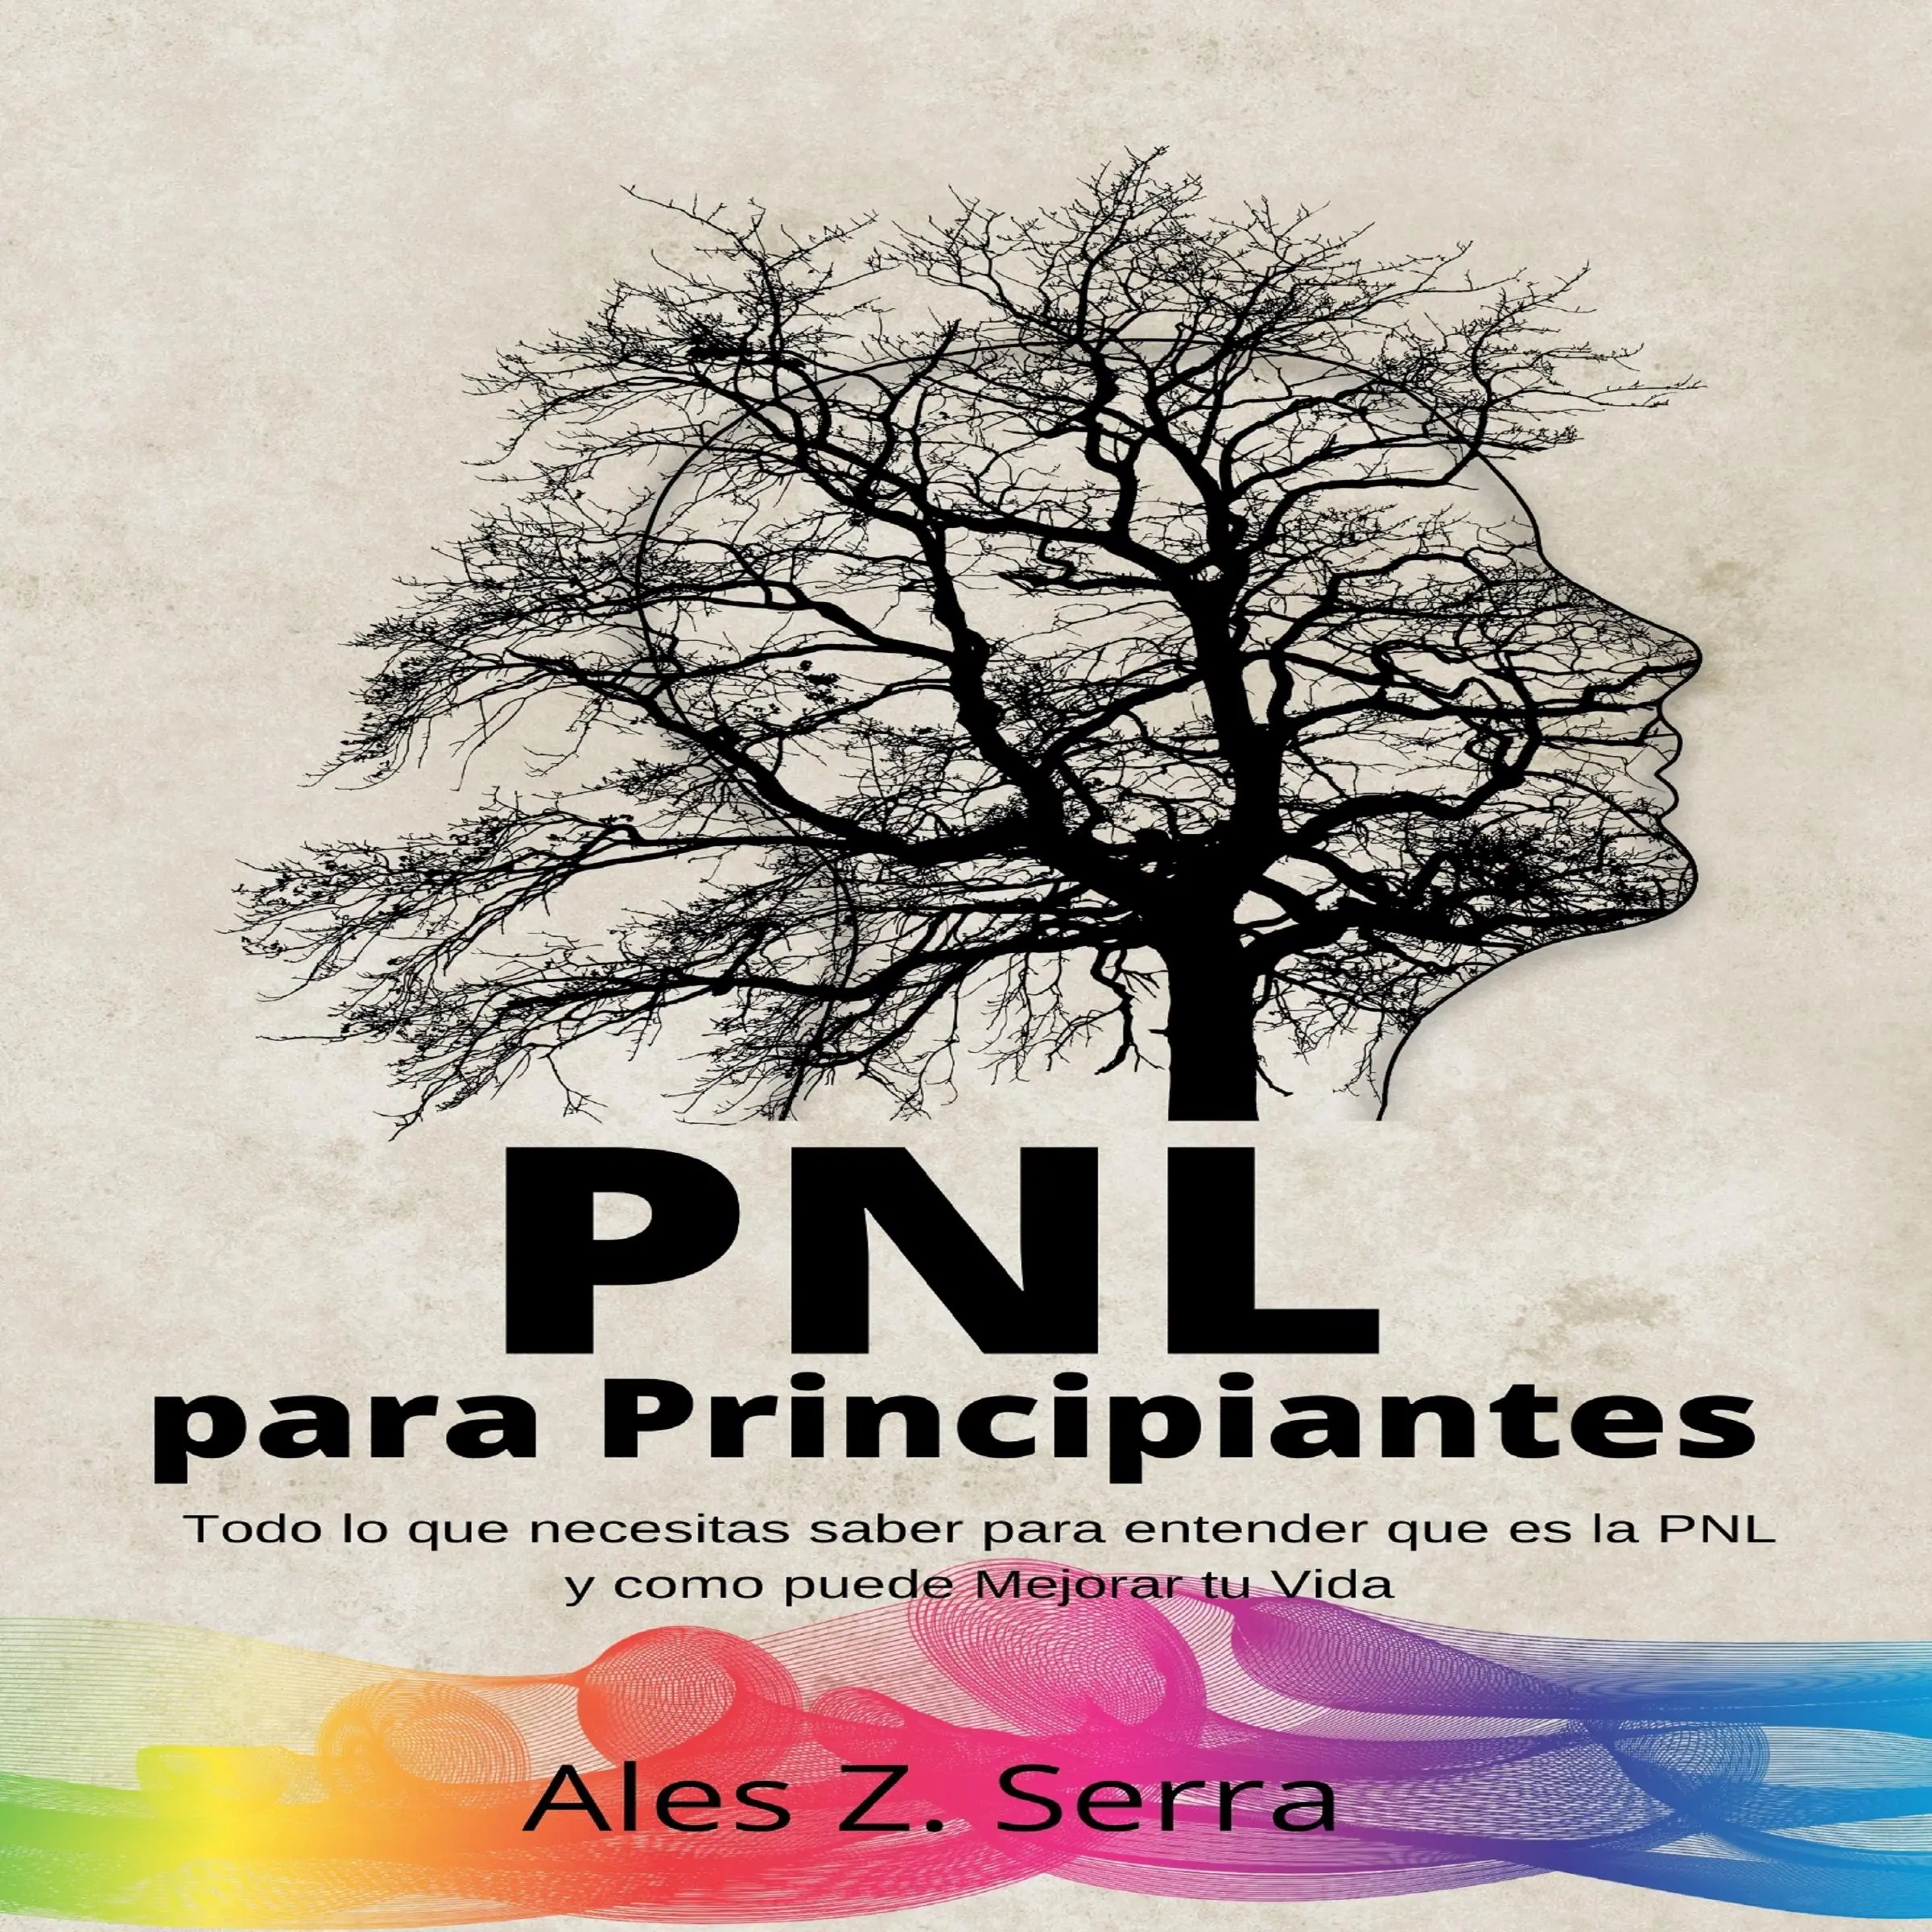 PNL Para Principiantes Audiobook by Ales Z. Serra